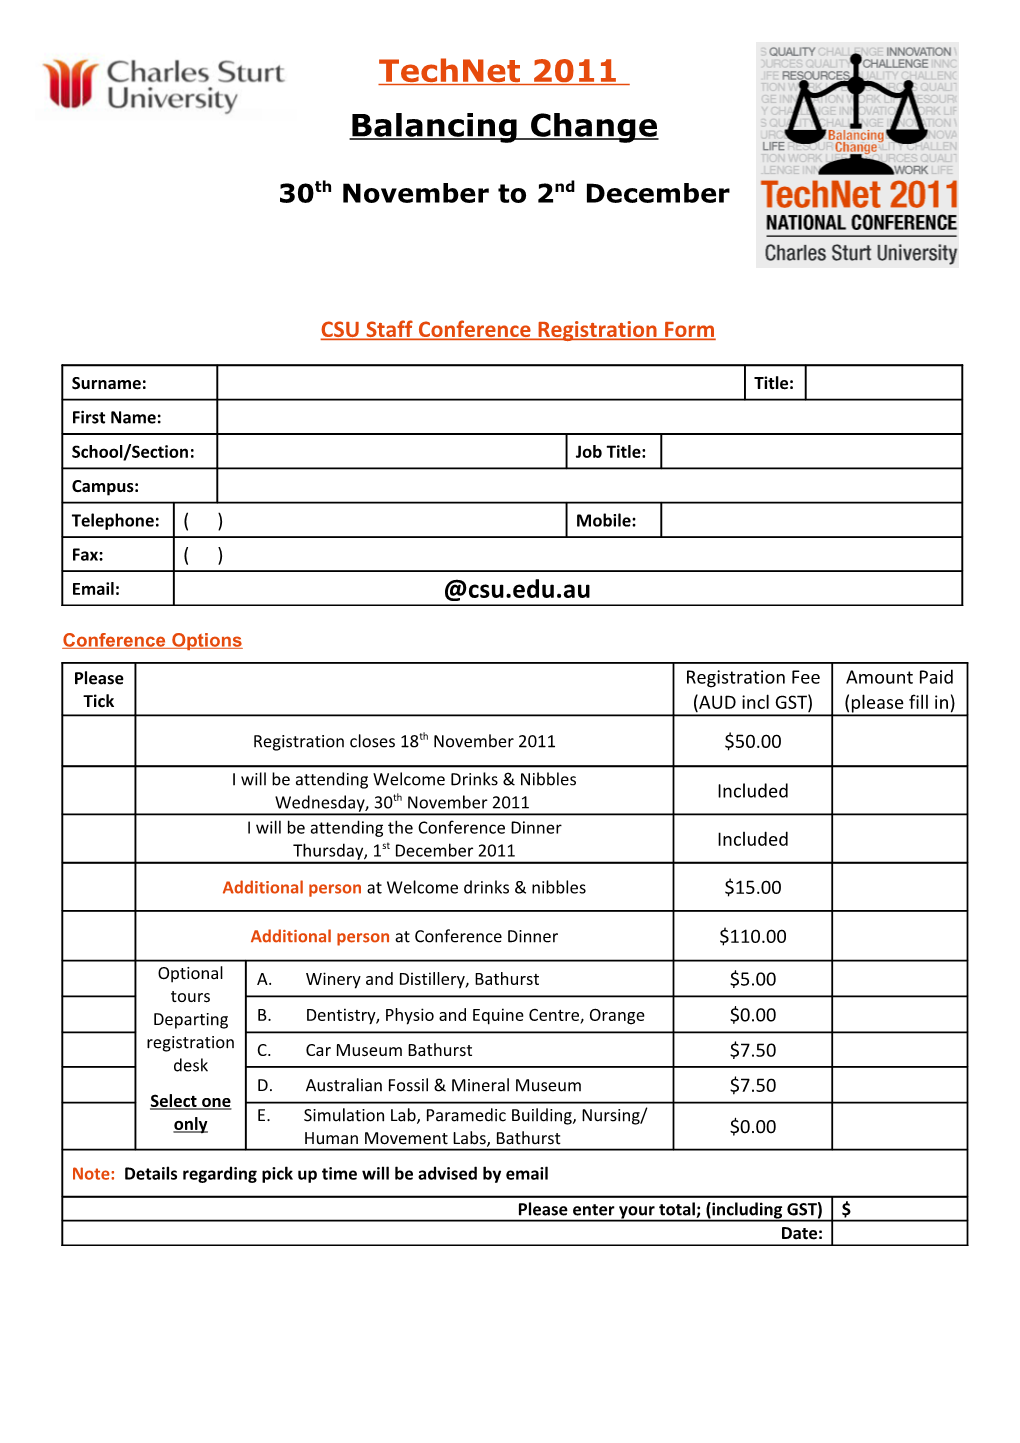 CSU Staff Conference Registration Form